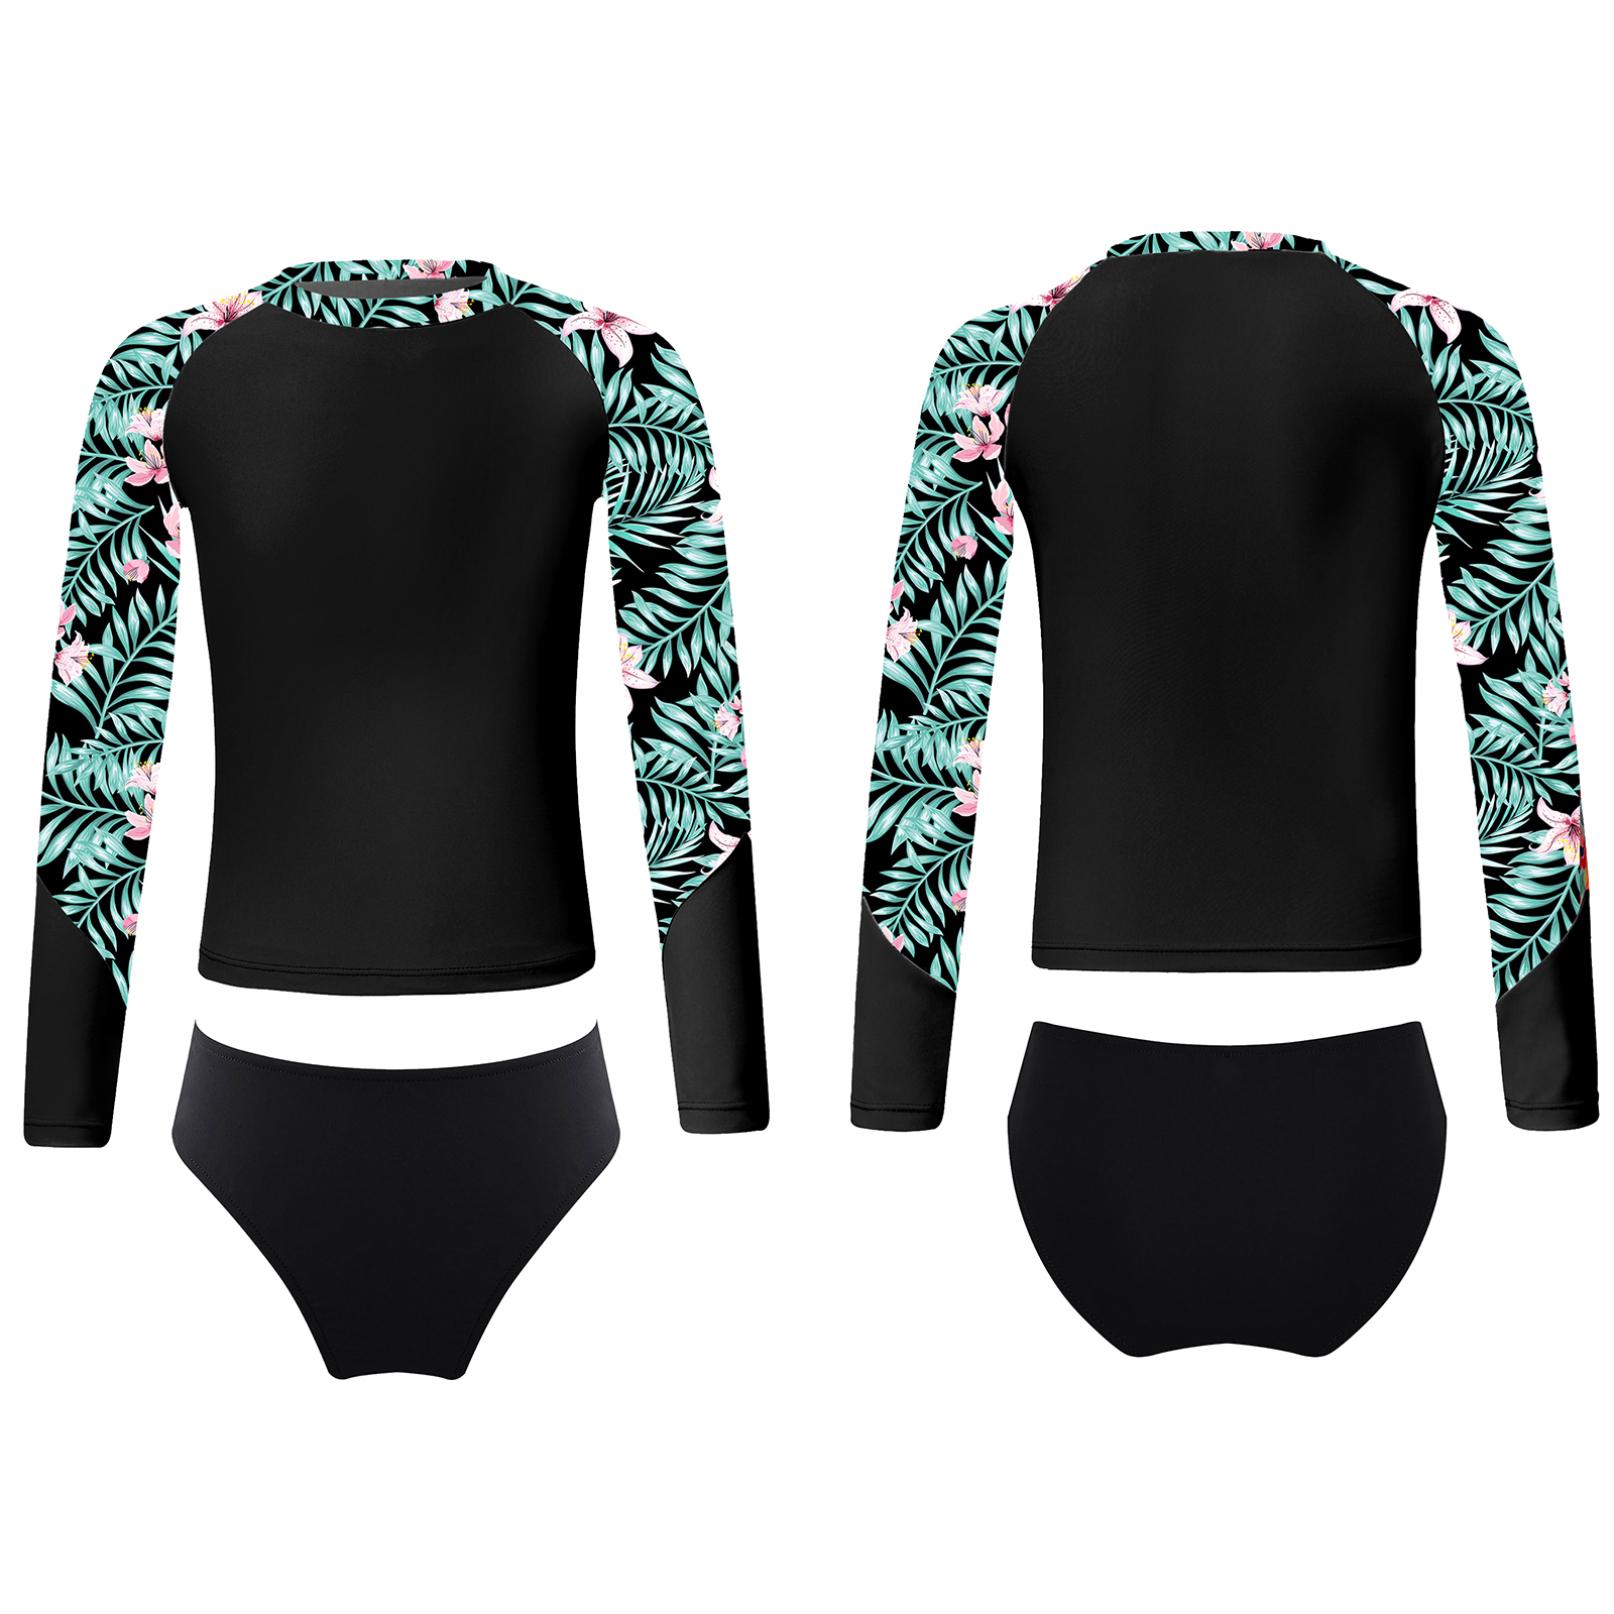 Inlzdz Rashguard Swimsuit for Girls UV Protection 2 Pieces Swimsuit Long Sleeve Swimming Shirt with Bikini Bottoms Swimwear